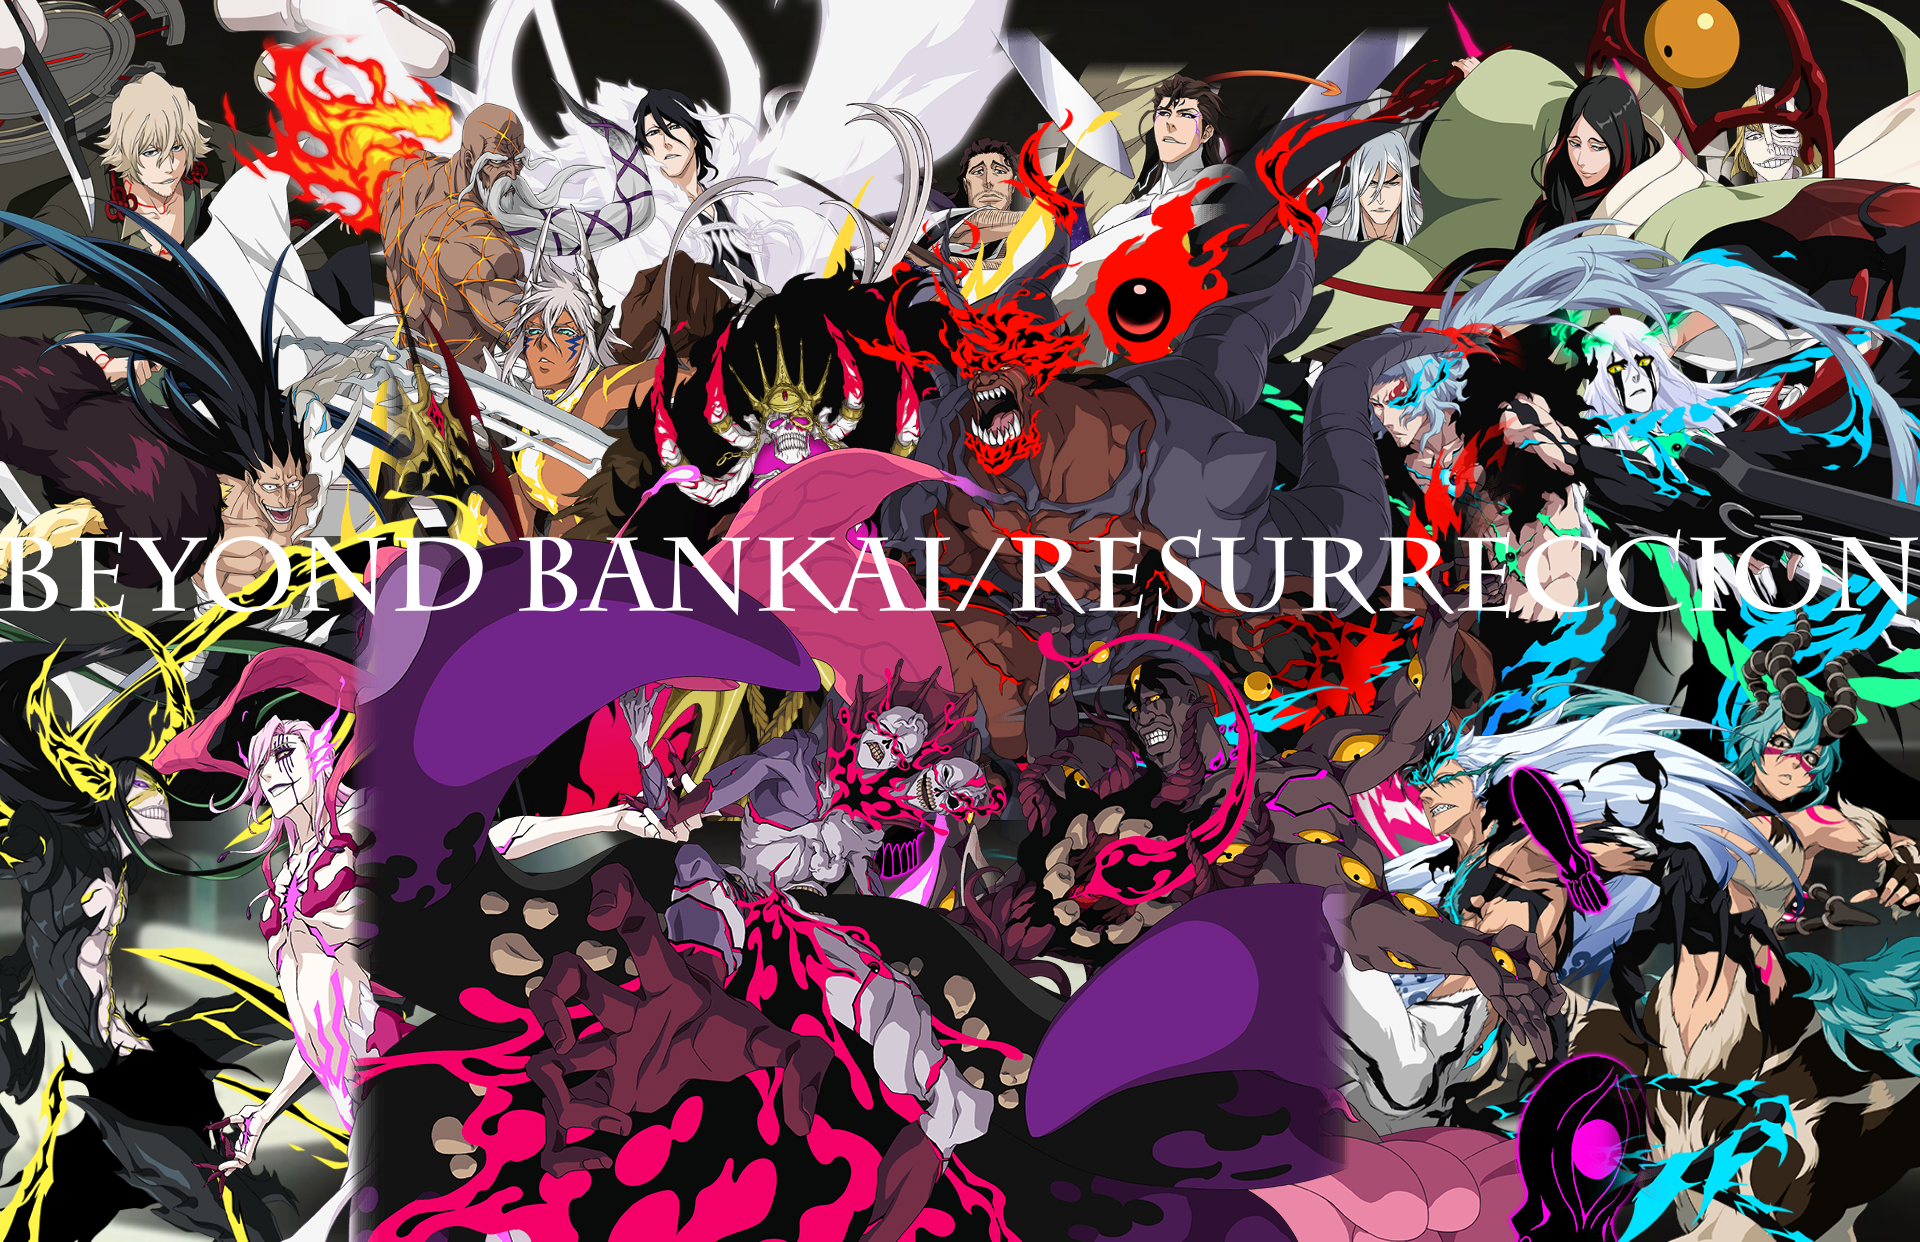 Beyond Bankai/Resurreccion by yoink17 on DeviantArt